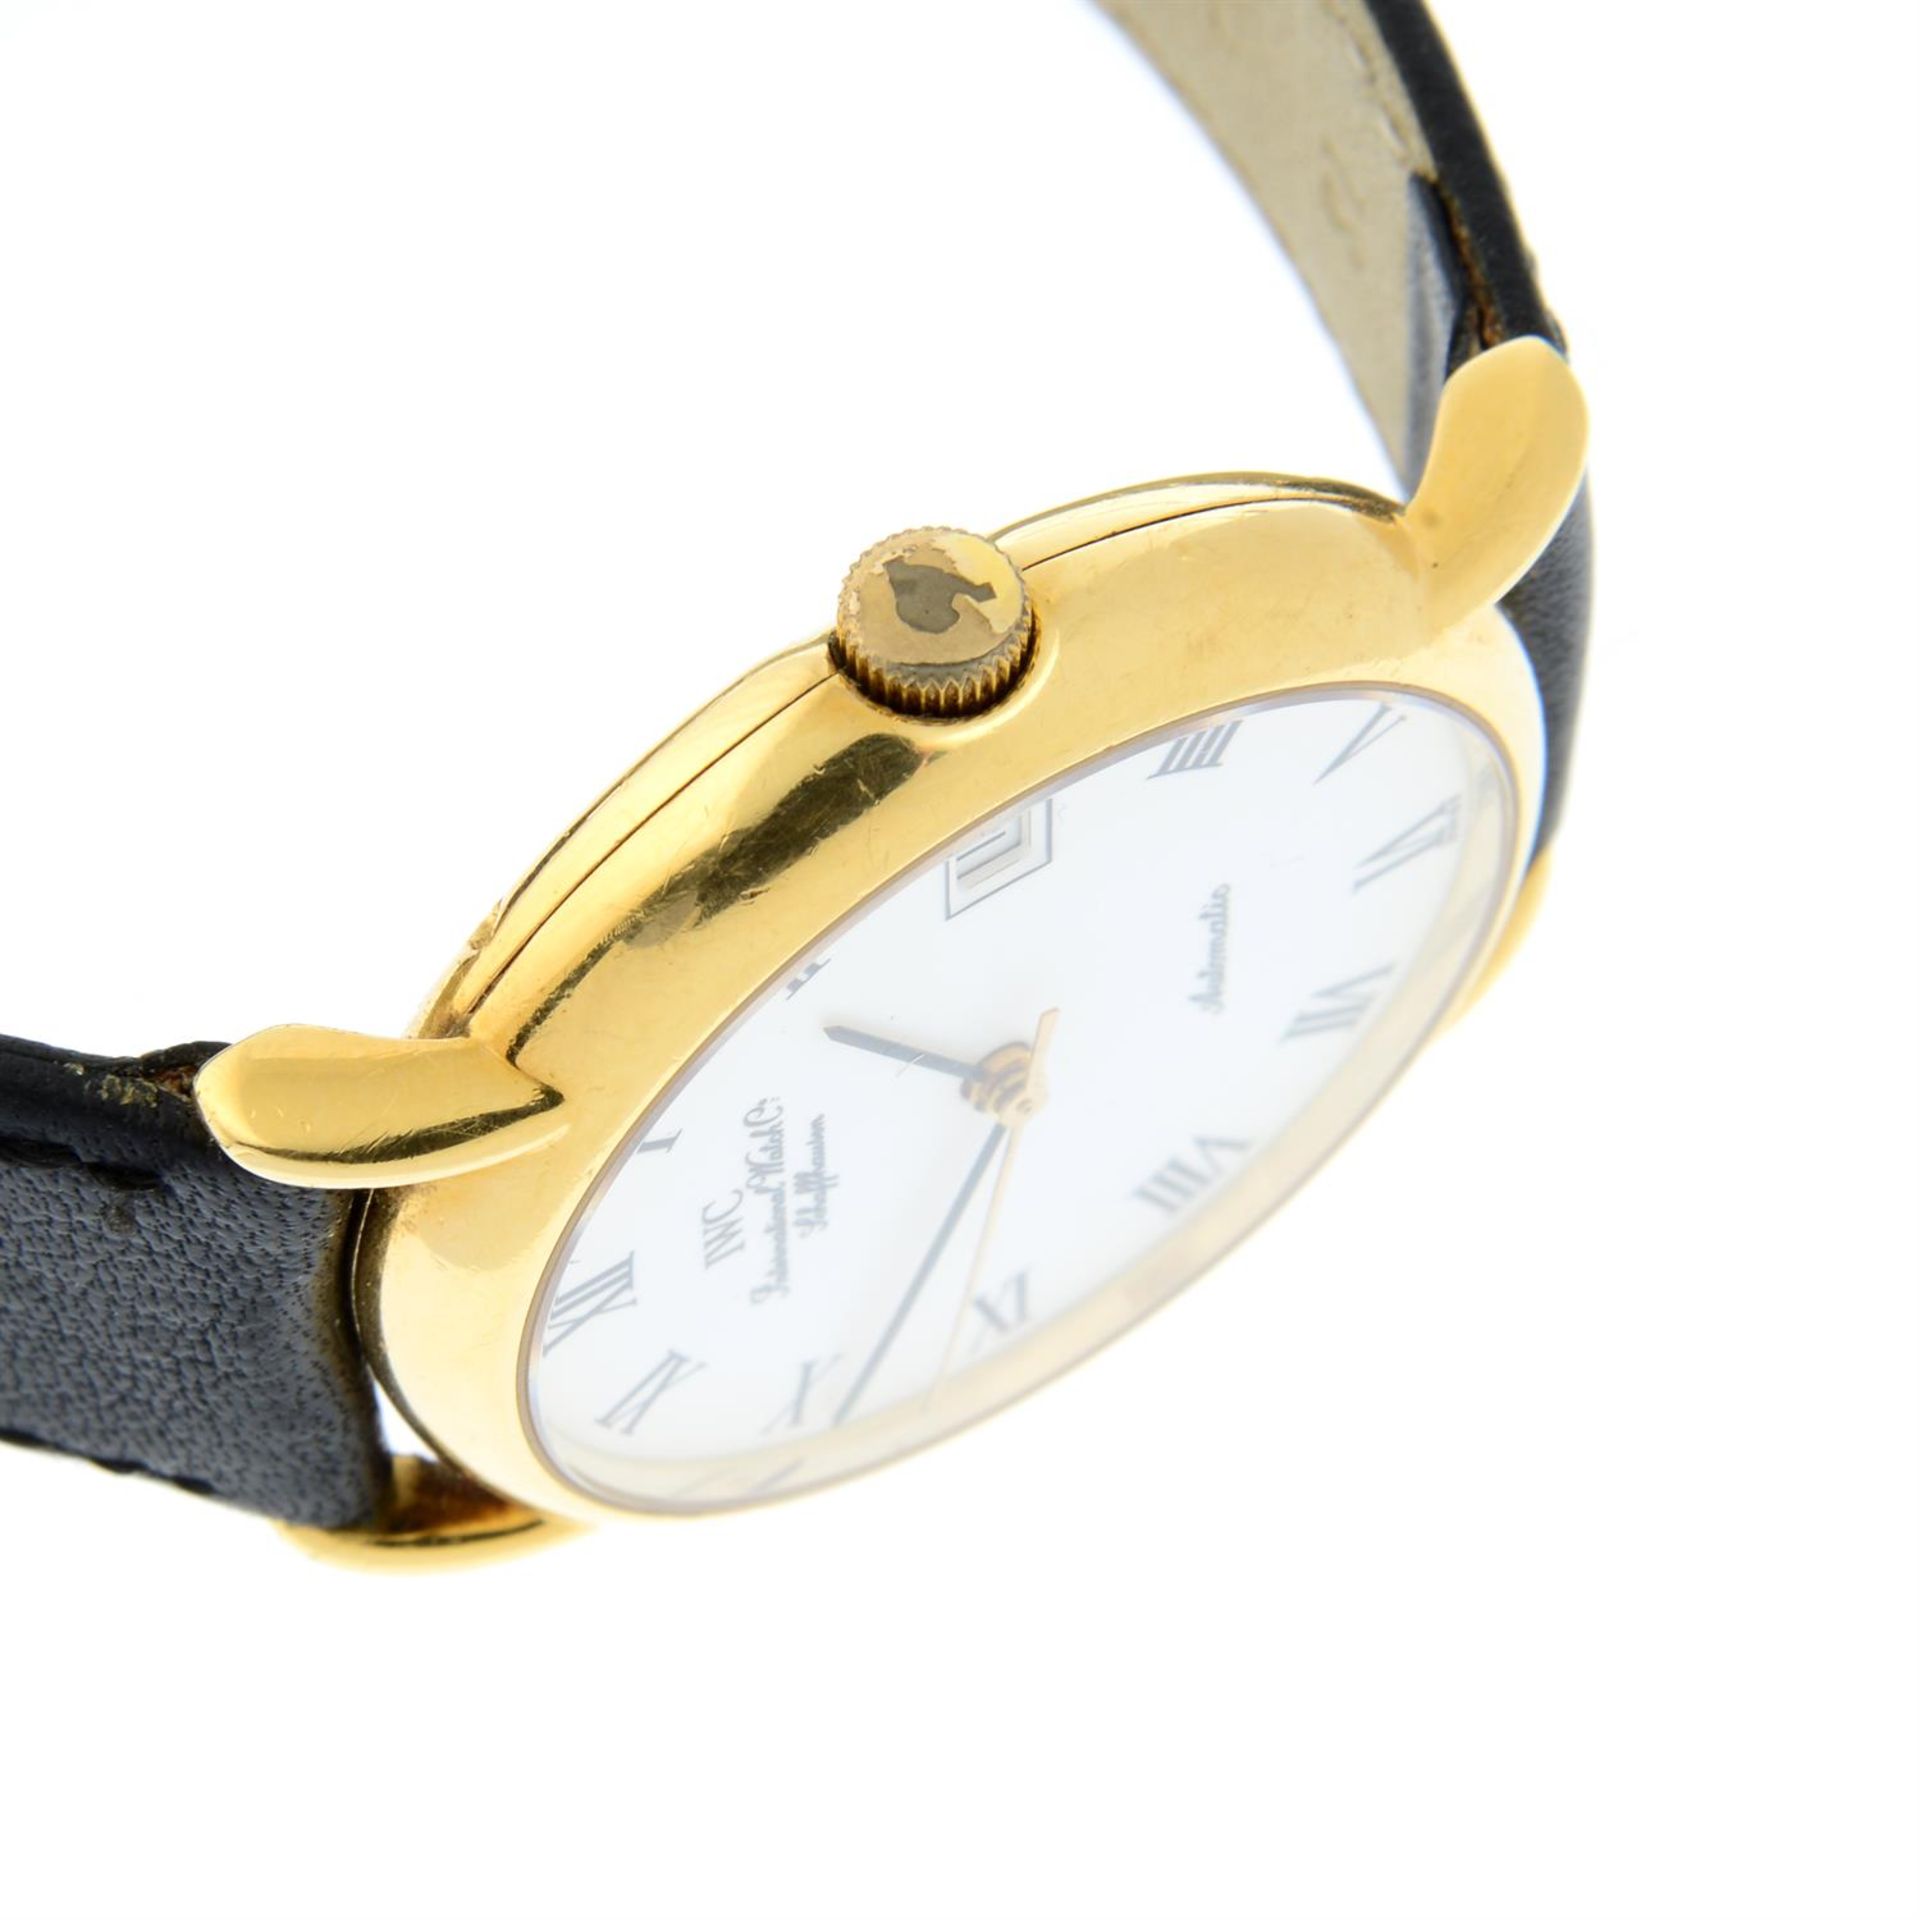 IWC - a yellow metal wrist watch, 34mm. - Image 3 of 5